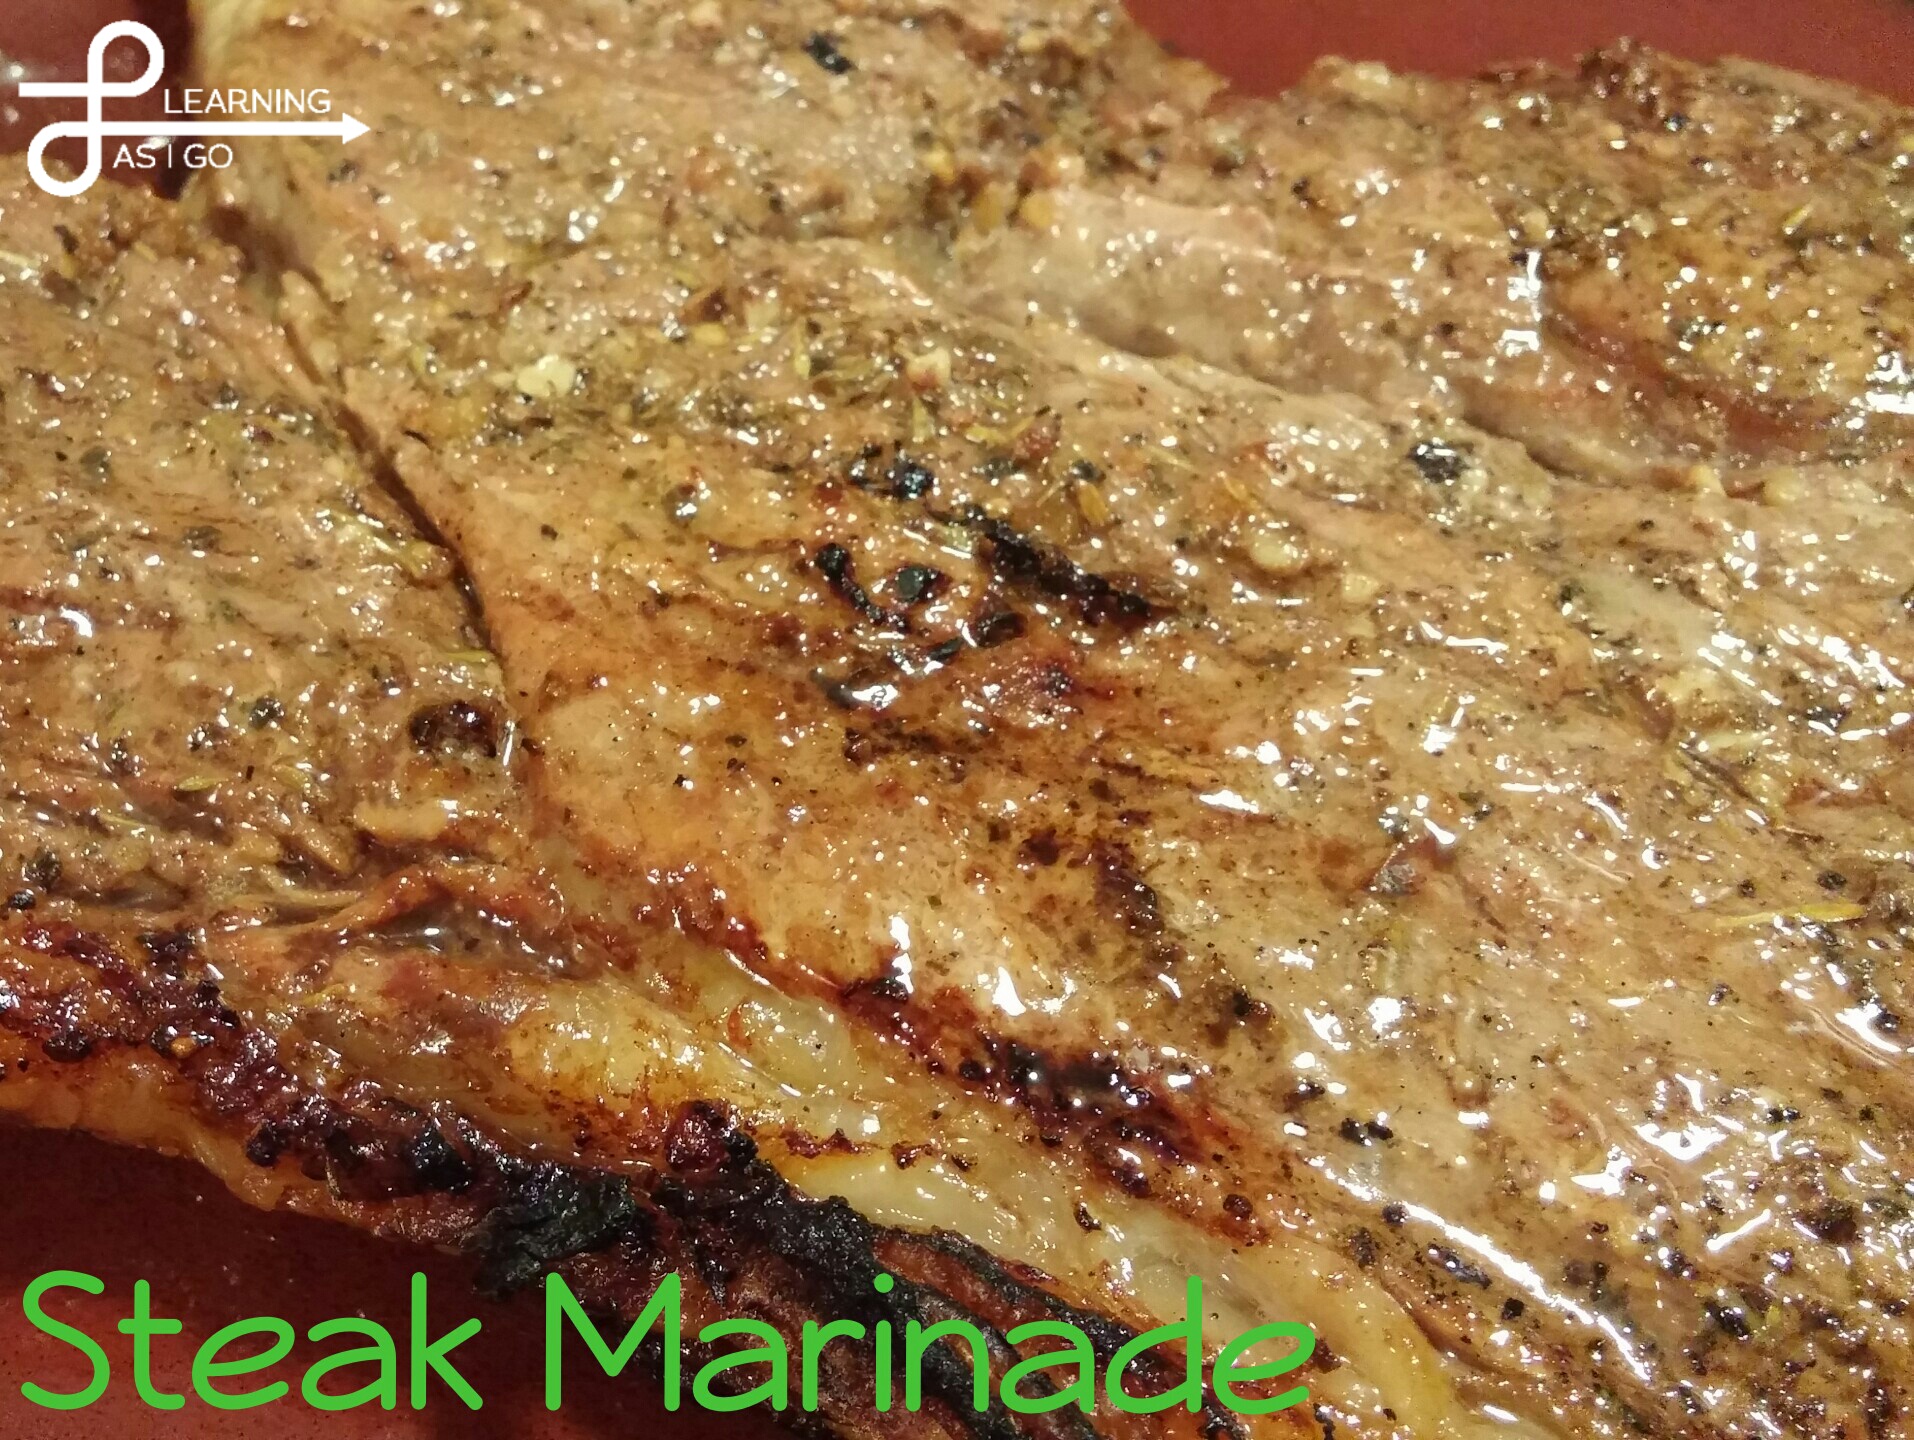 Steak Marinade for Sirloin